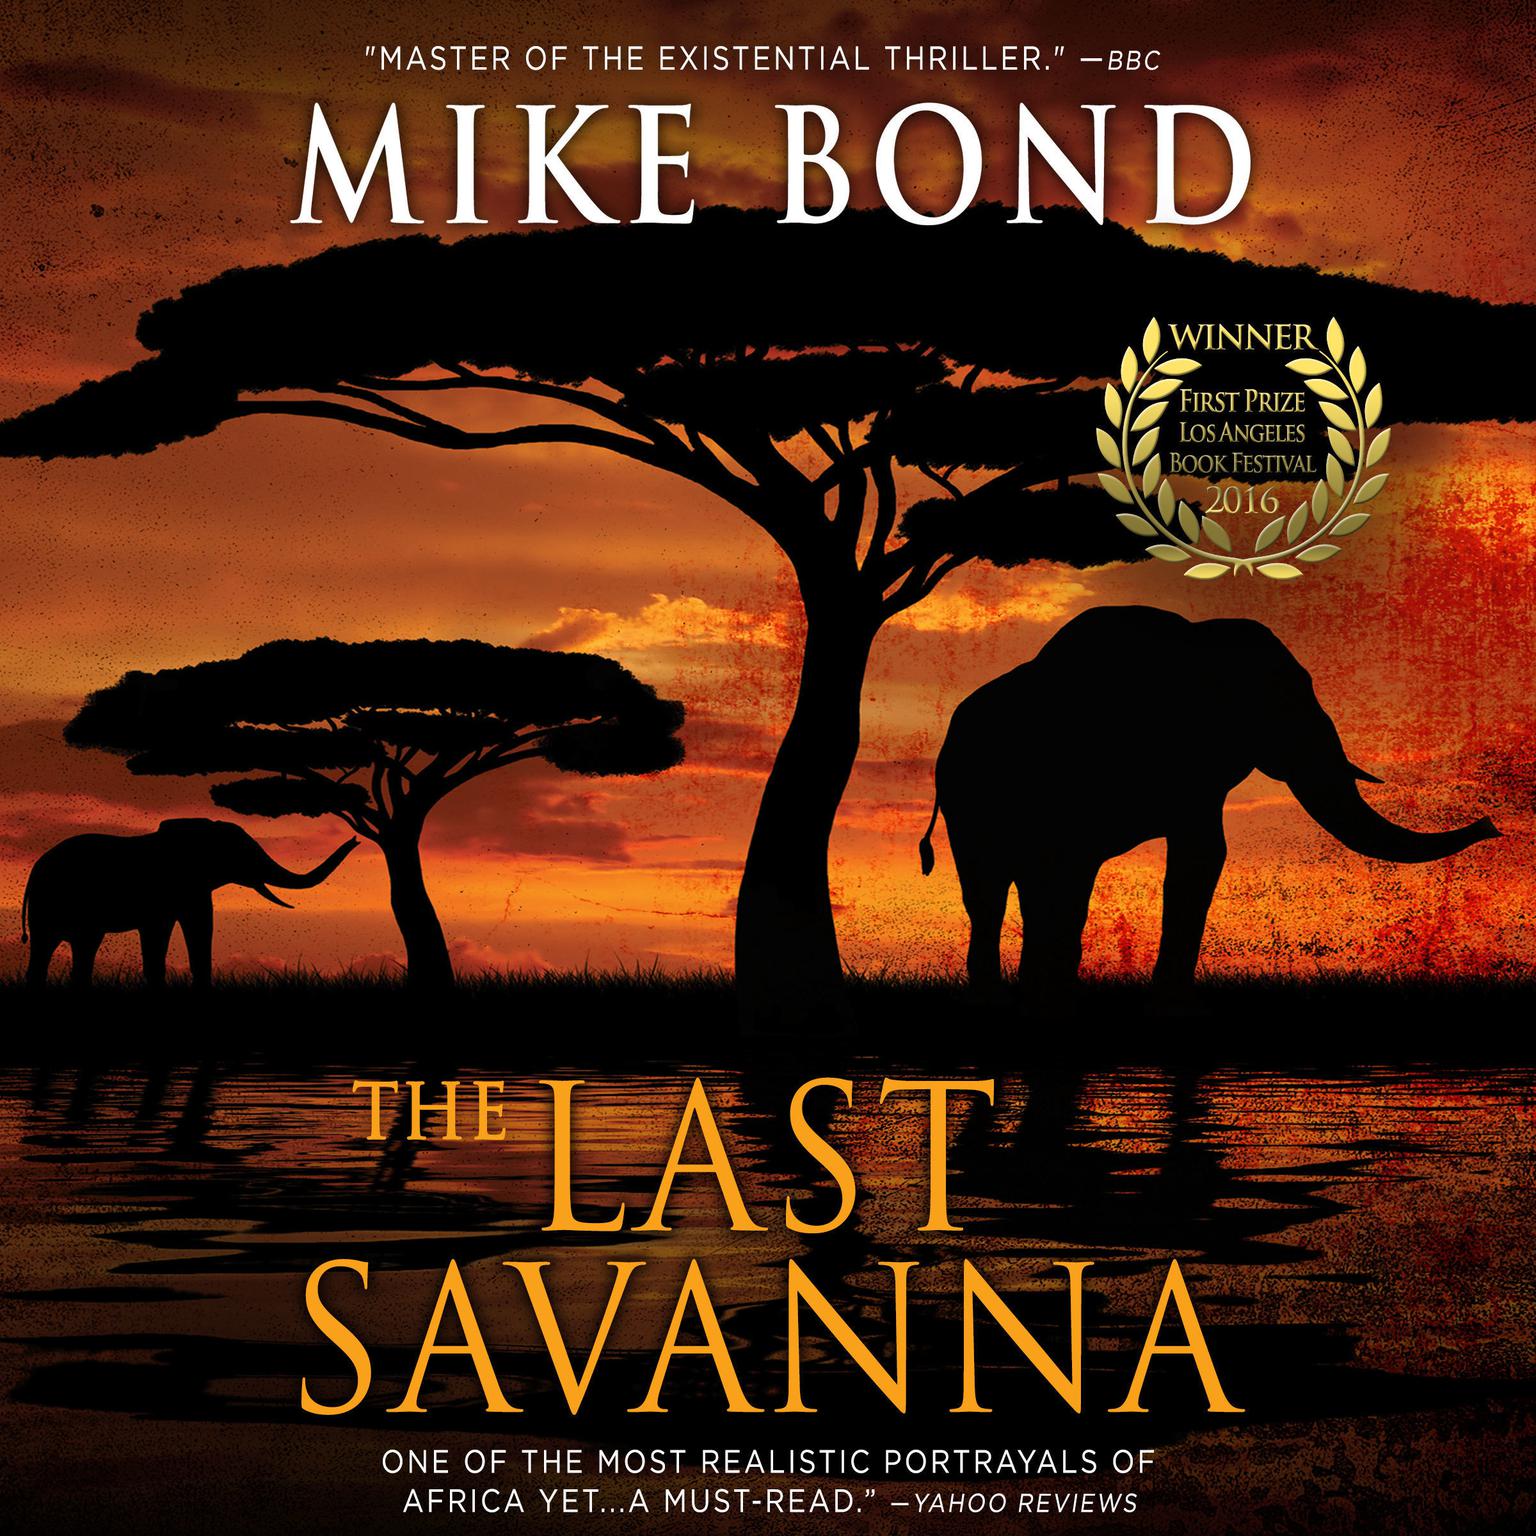 The Last Savanna Audiobook, by Mike Bond